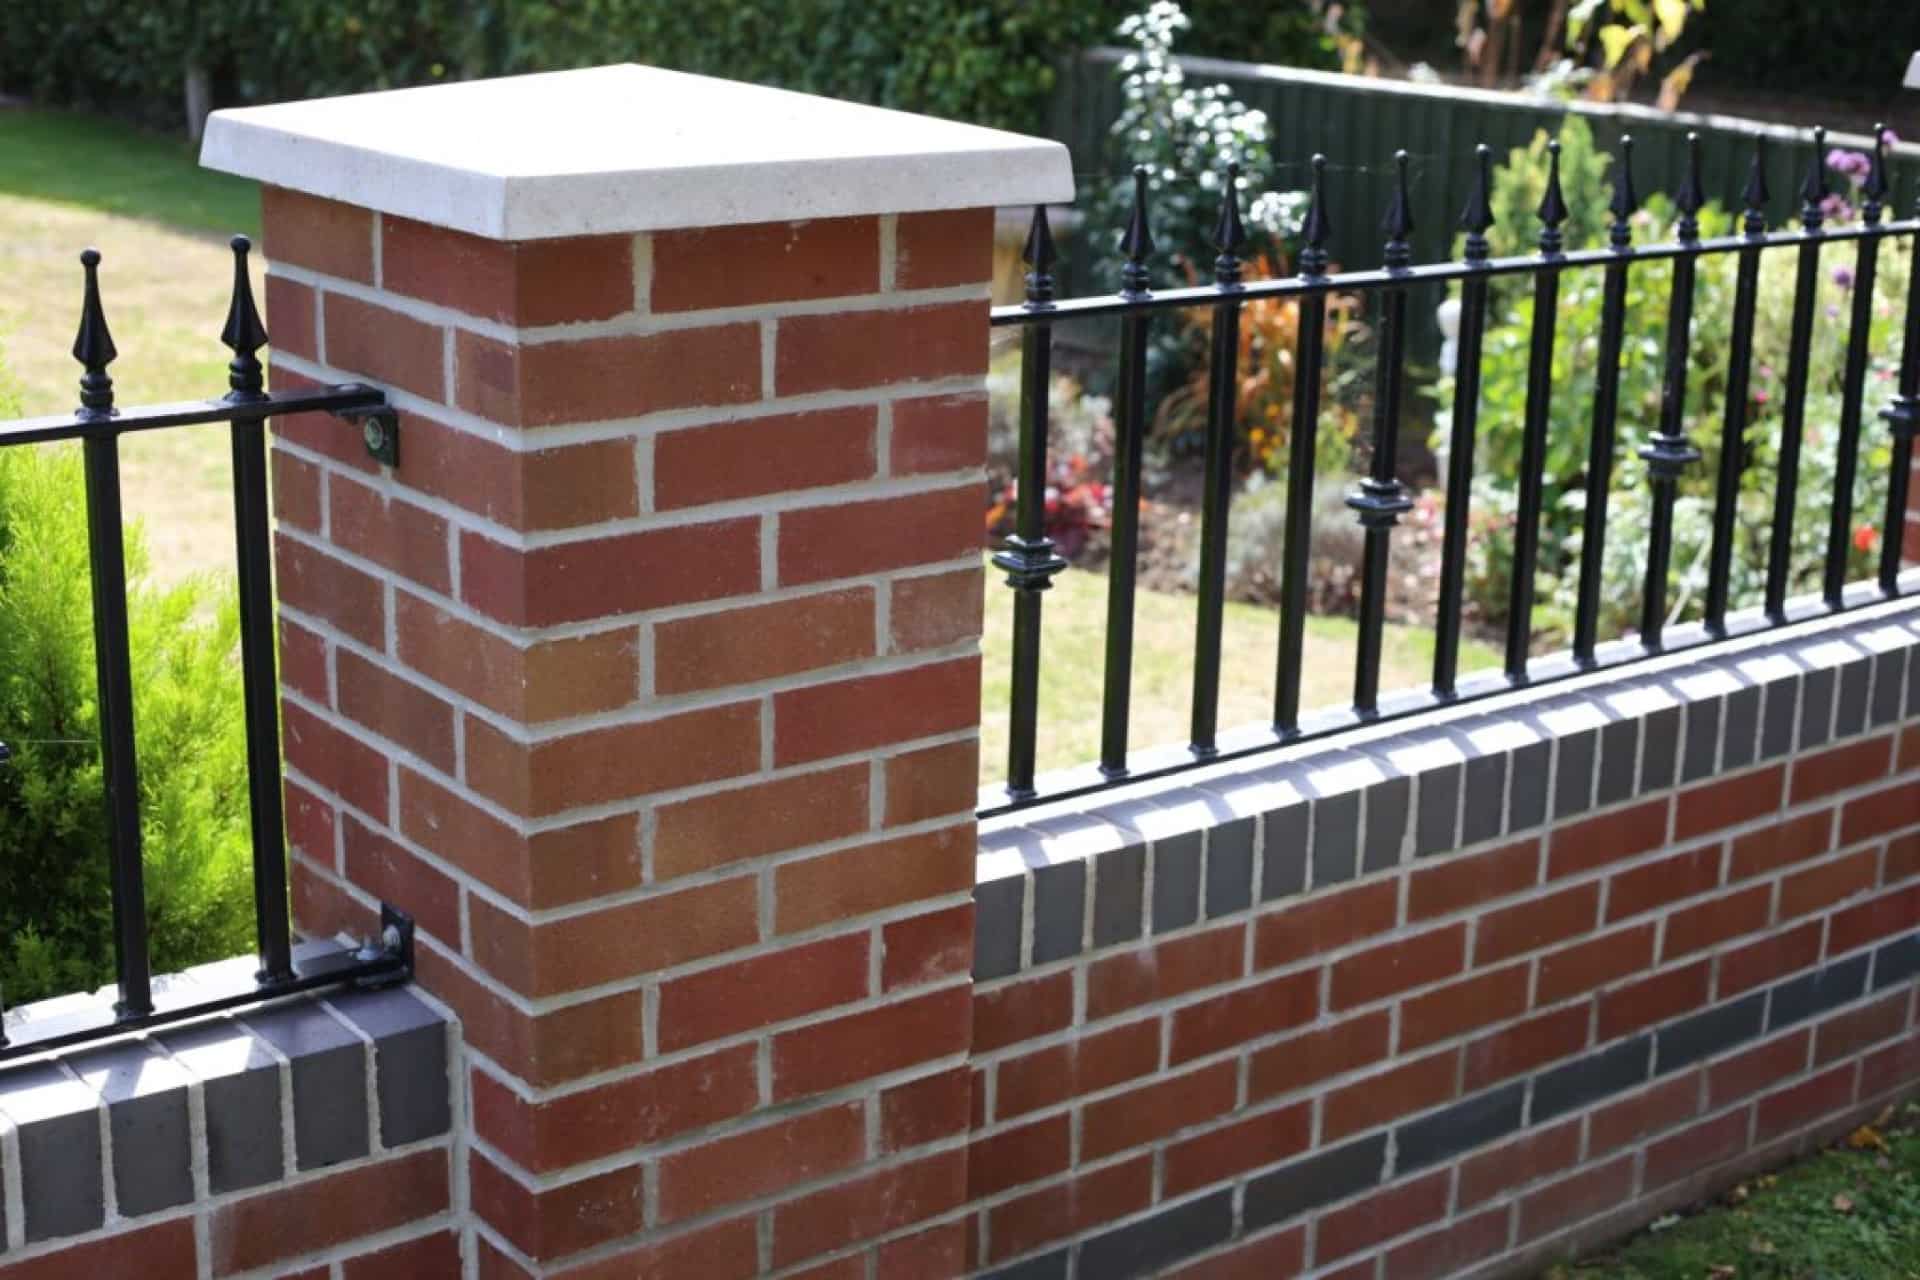 Quality Clevedon Brickwork & Walls company